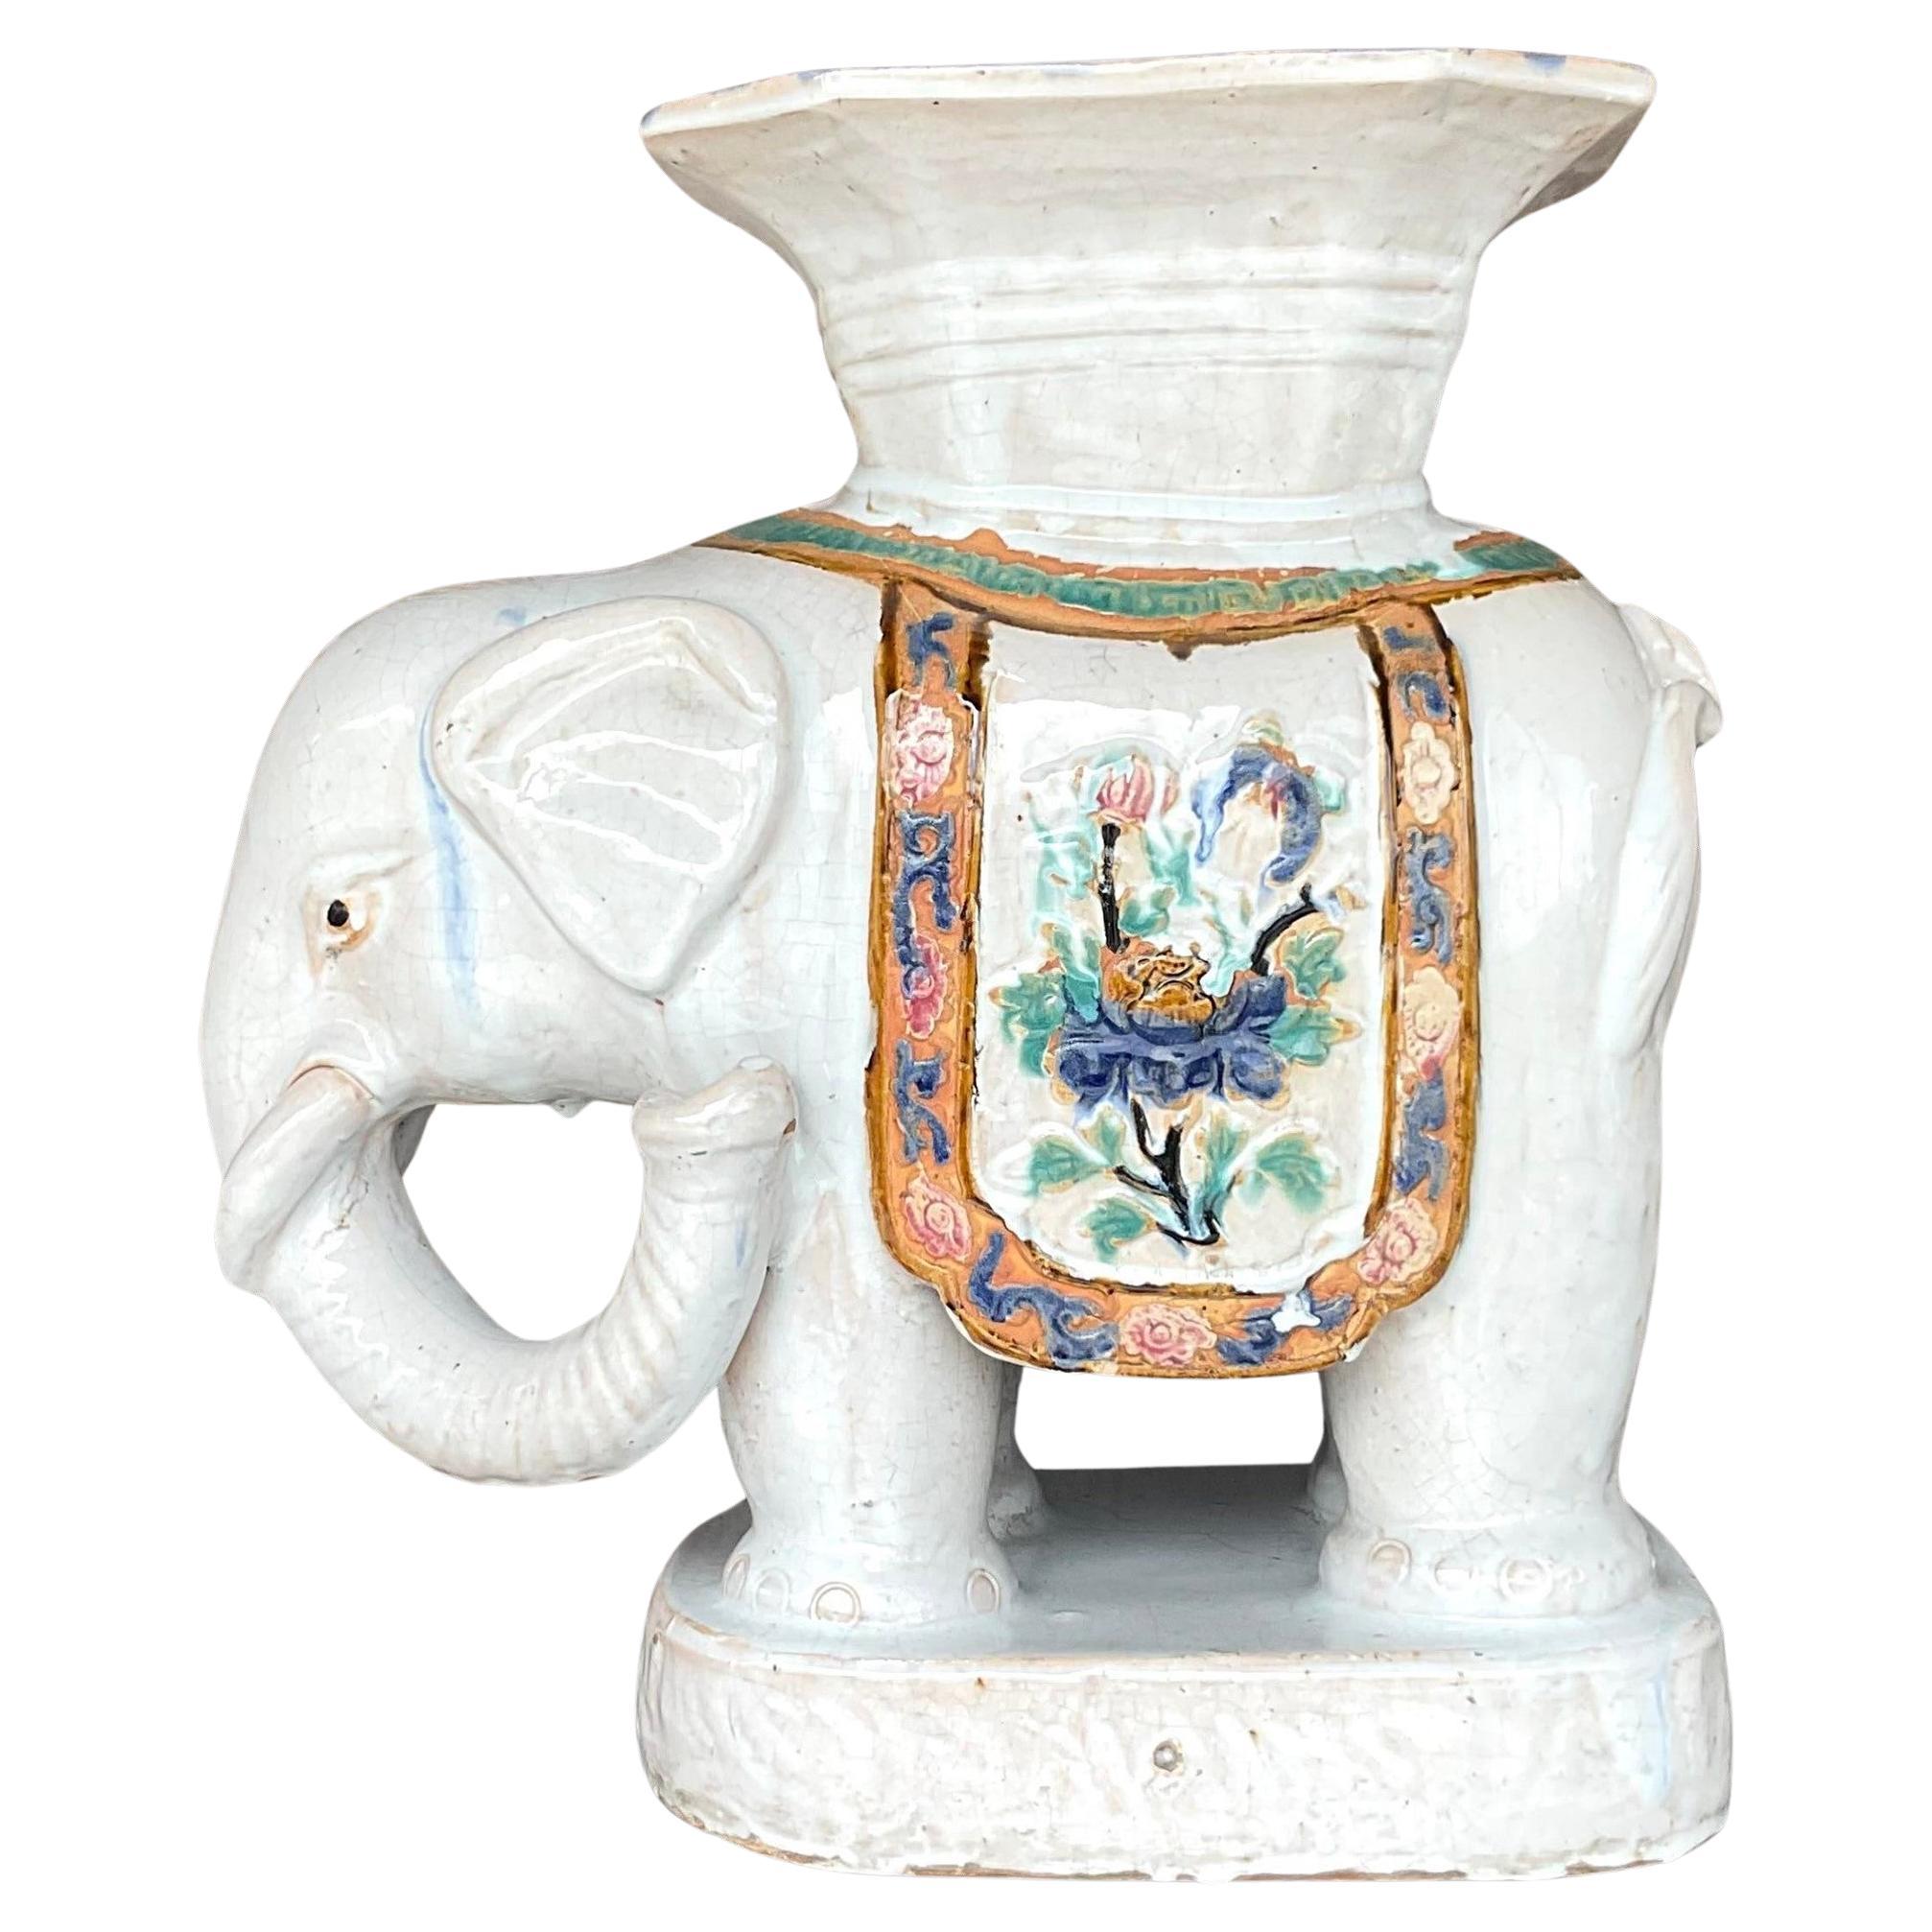 Vintage Boho glasierte Keramik weißer Elefant Hocker